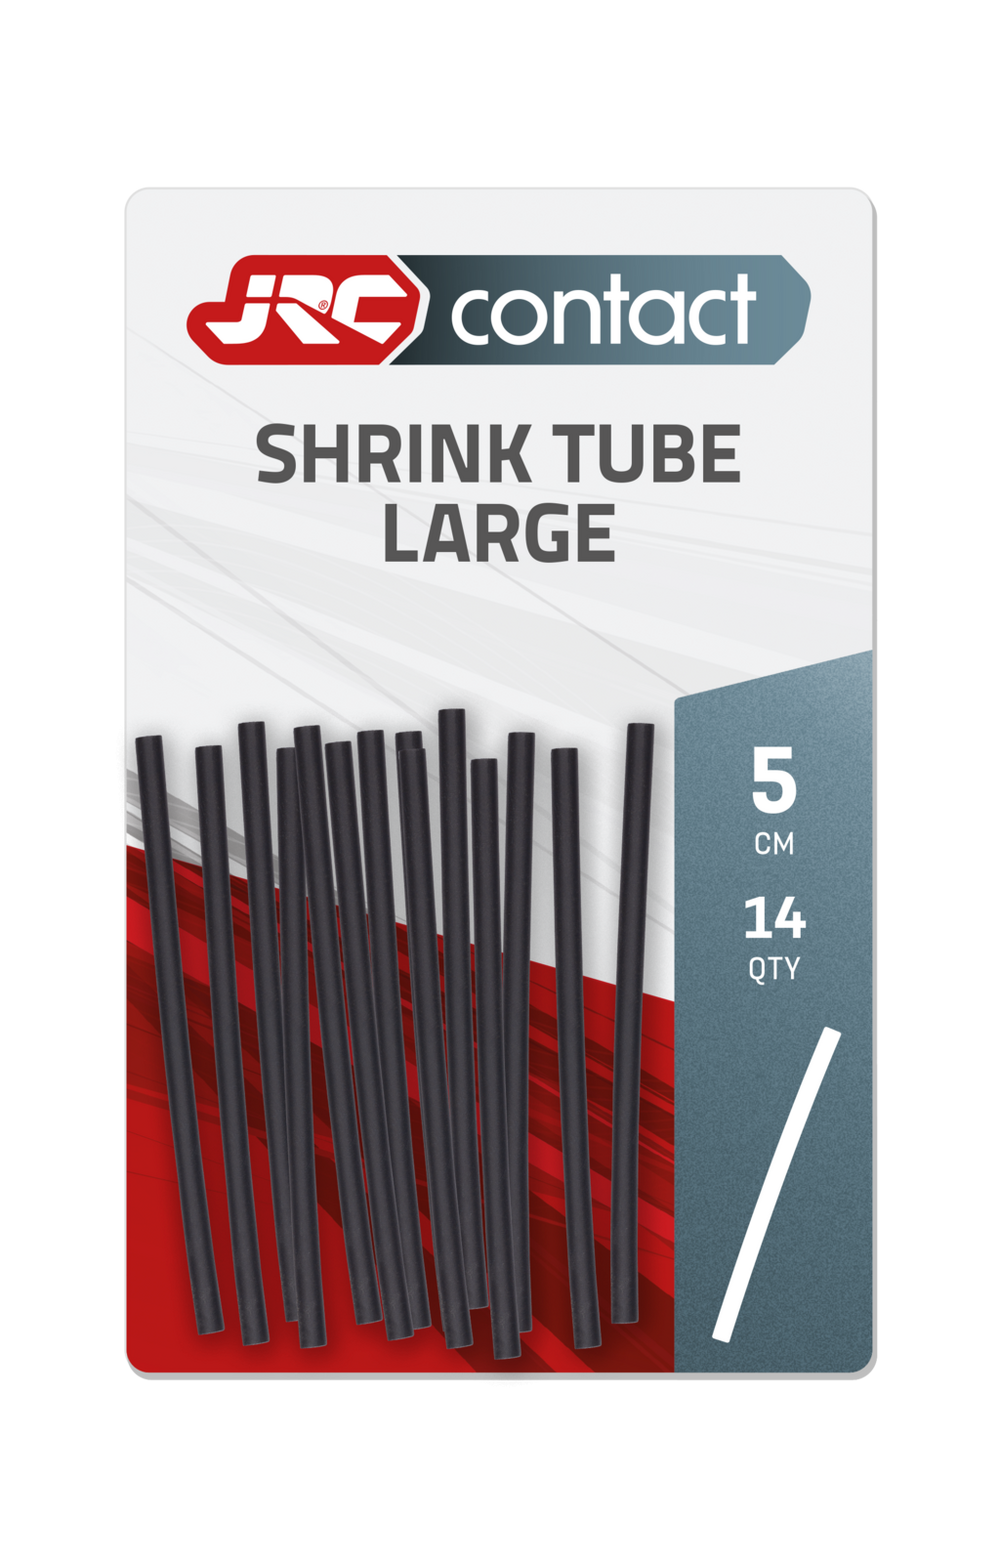 JRC Contact Shrink Tube Large